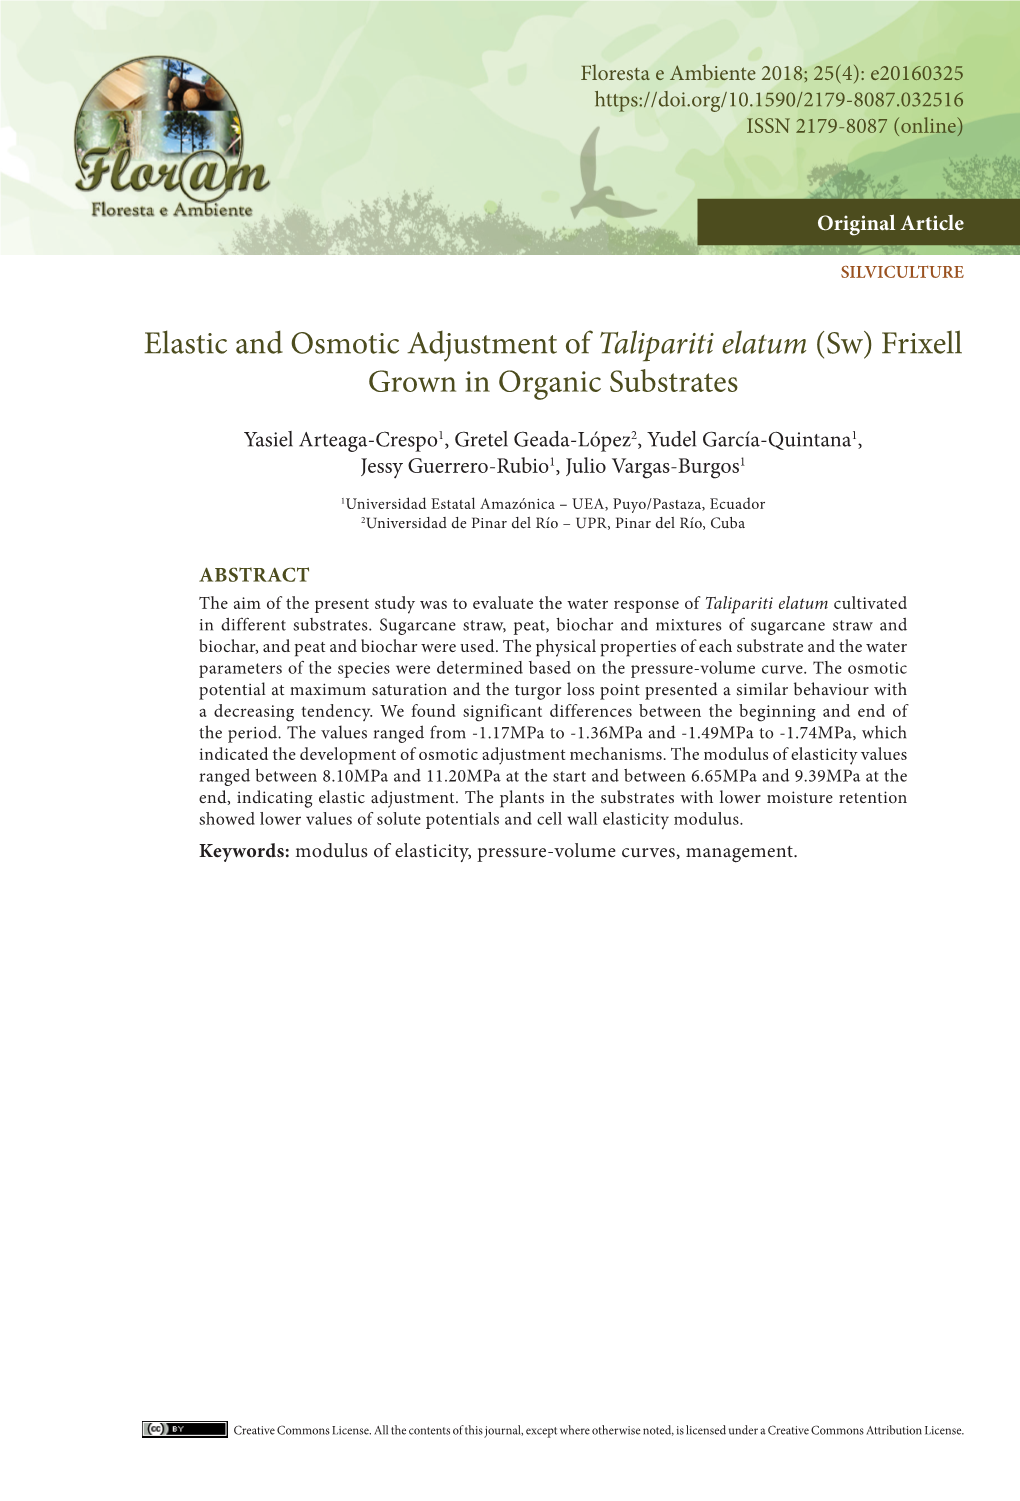 Elastic and Osmotic Adjustment of Talipariti Elatum (Sw) Frixell Grown in Organic Substrates